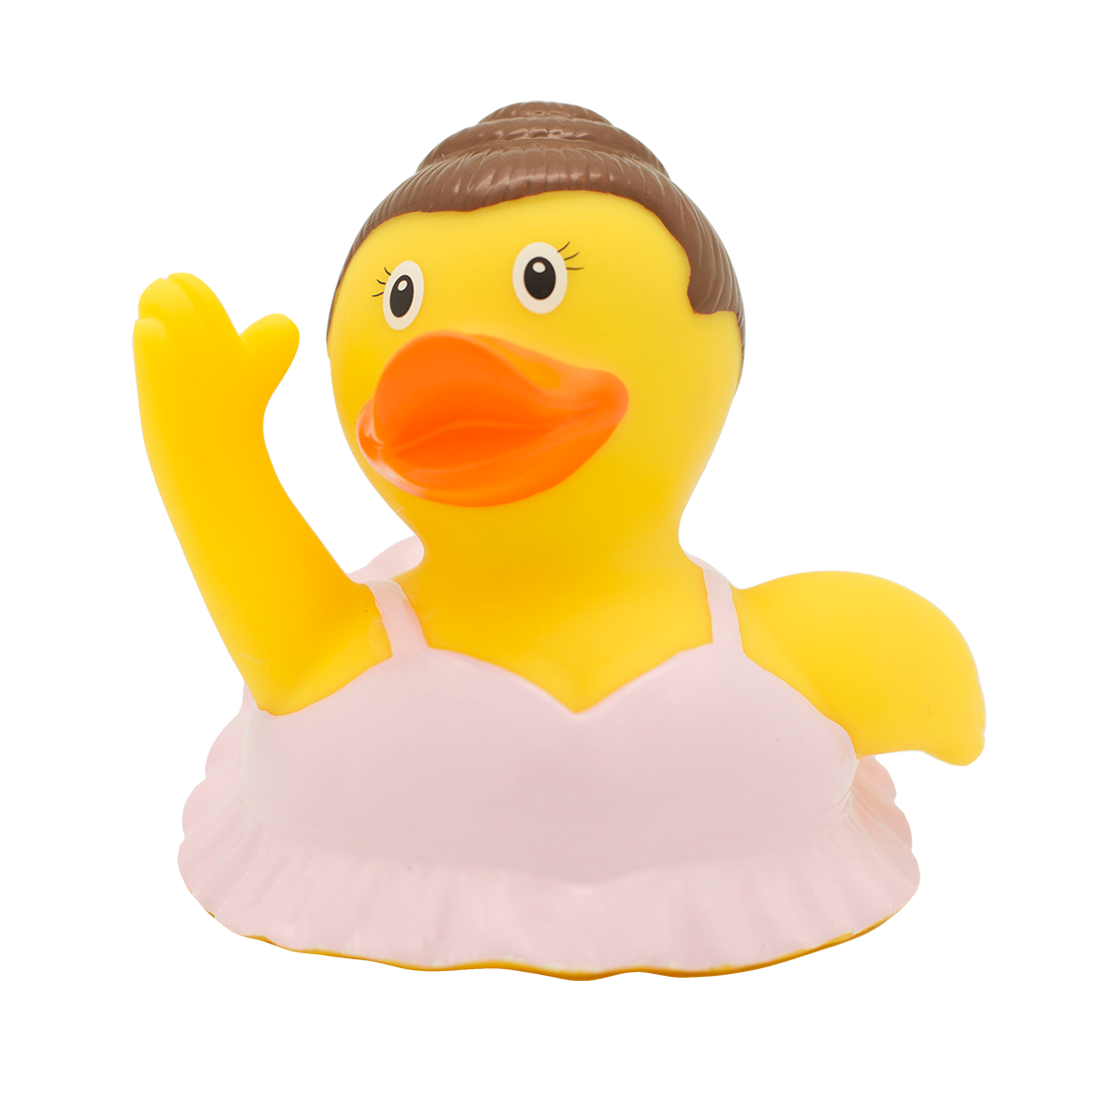 Star dancer duck